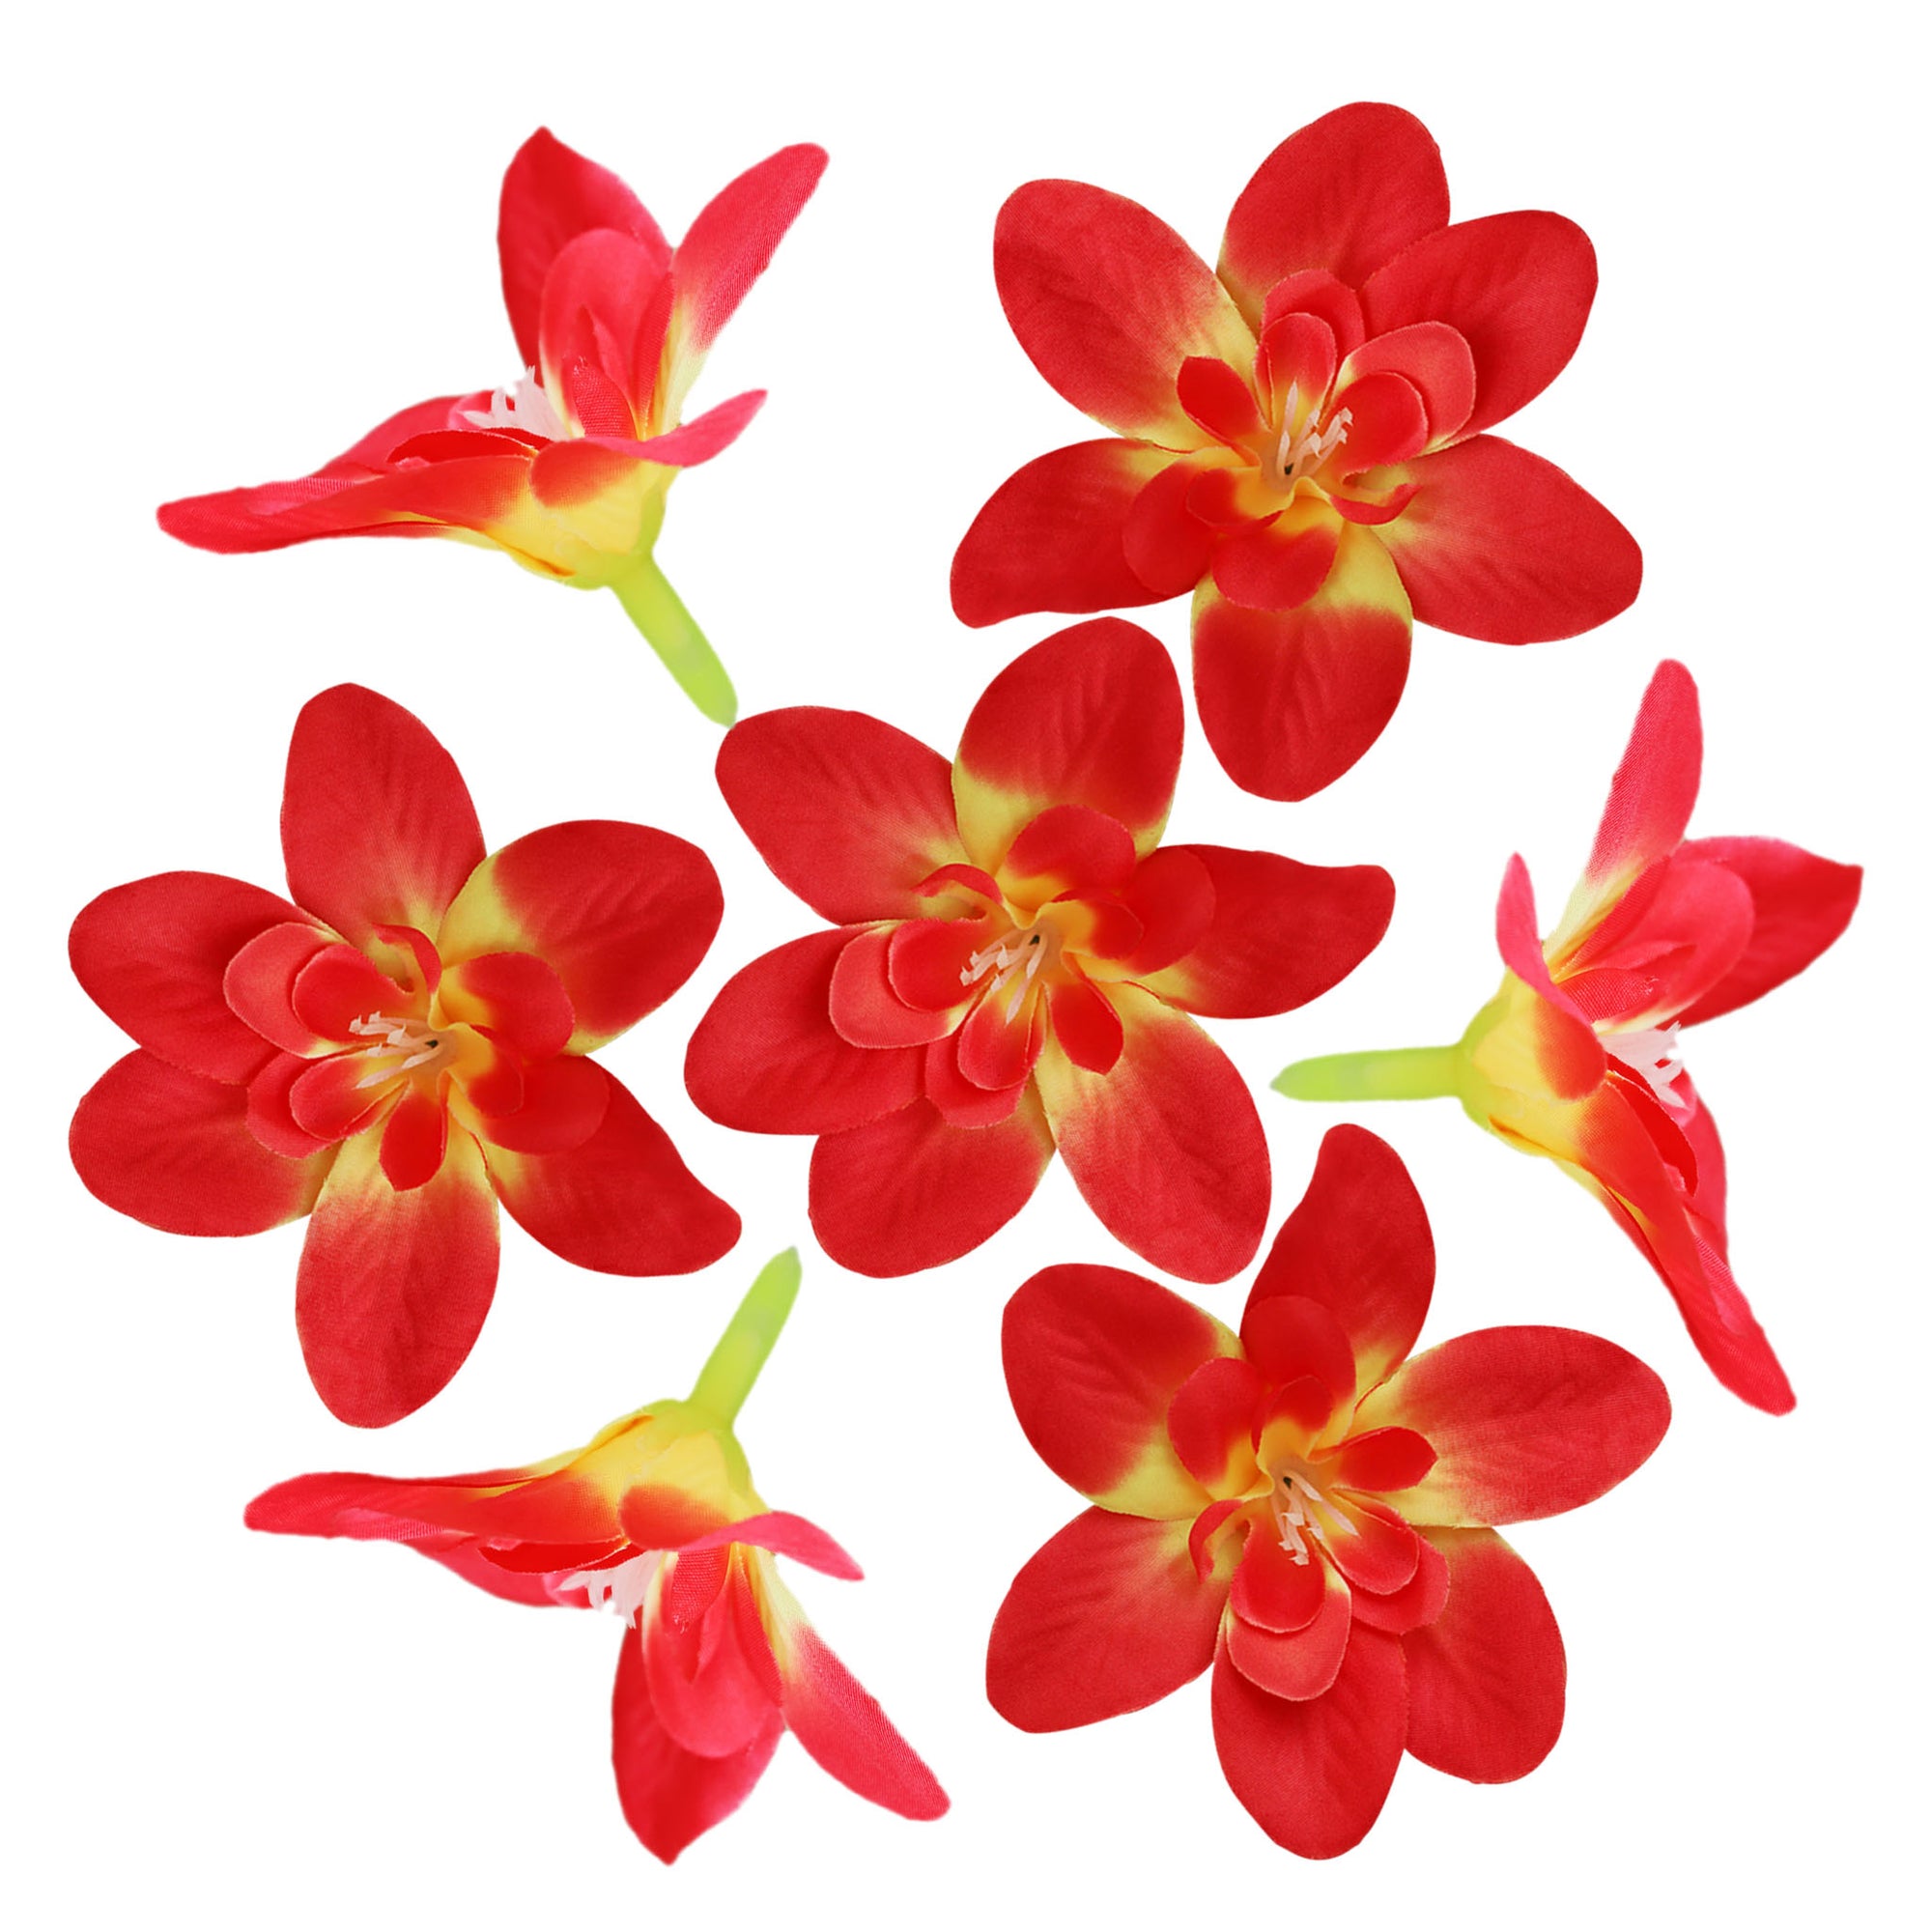 Thailand Silk Orchid Flower Heads 20pcs